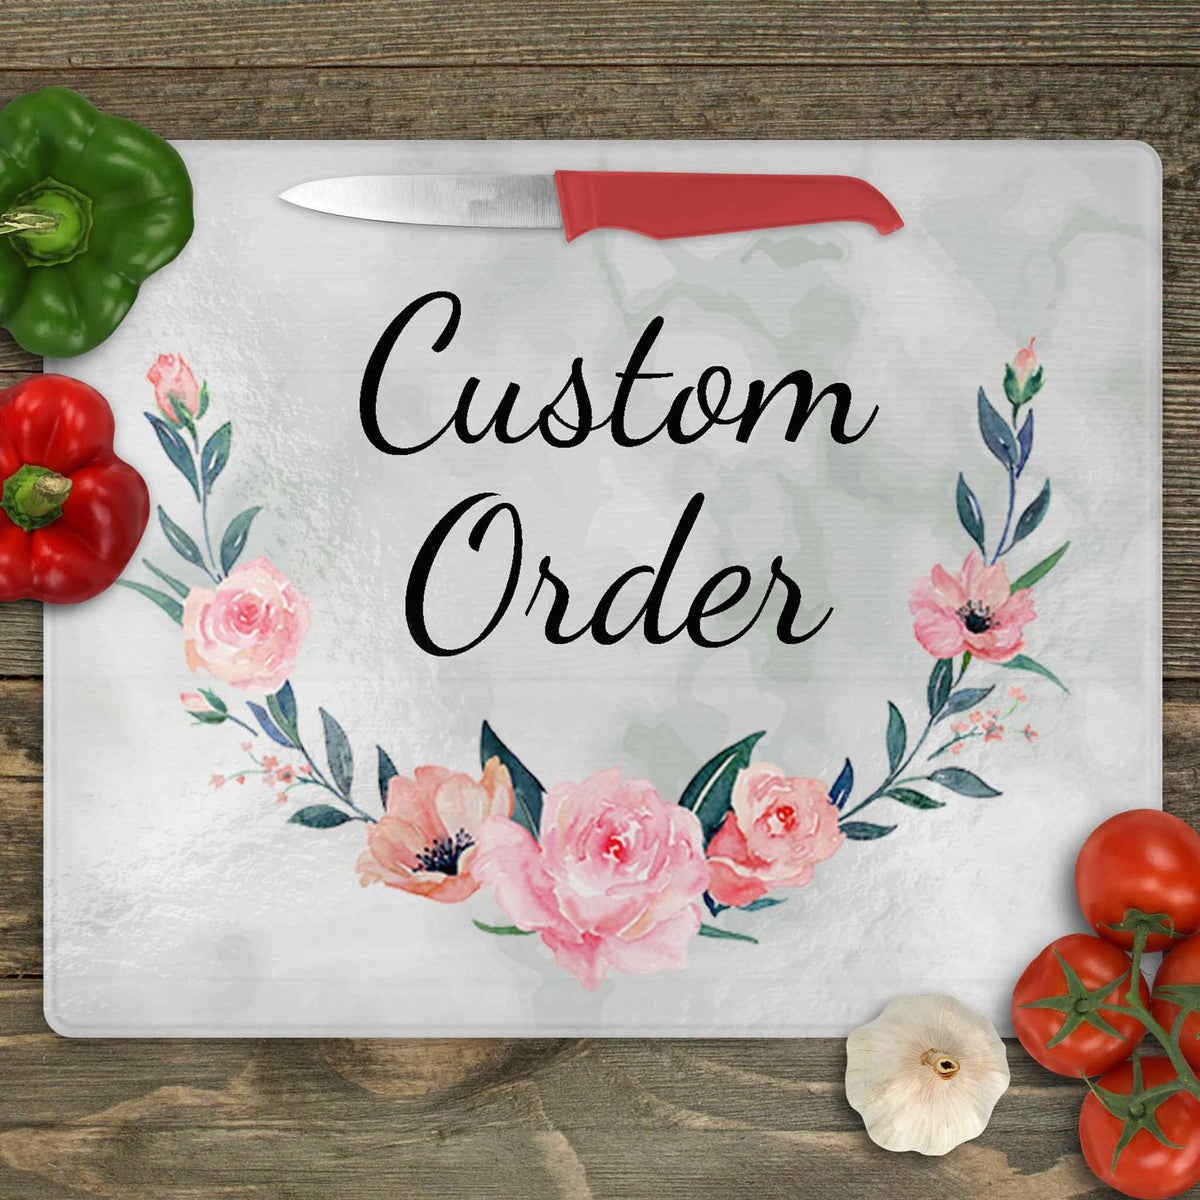 Personalized Cutting Board | Custom Glass Cutting Board | Custom Order